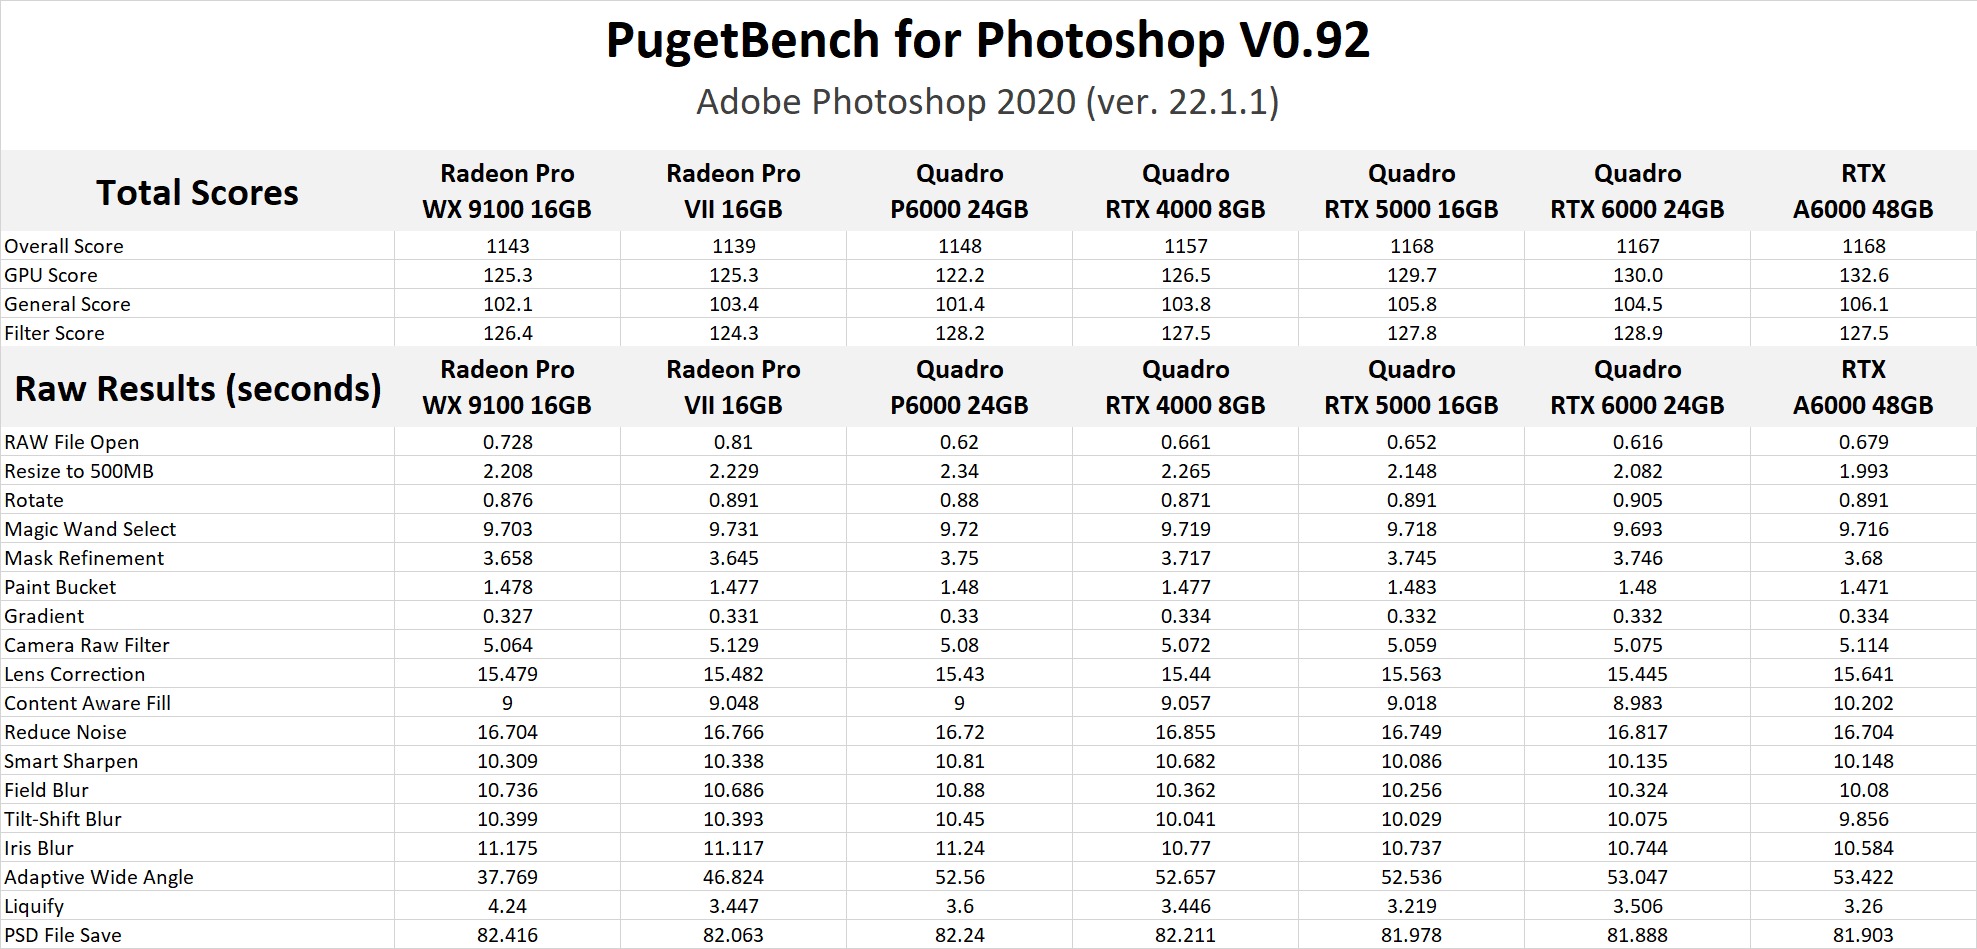 NVIDIA RTX A6000 48GB Photoshop GPU Performance Benchmark